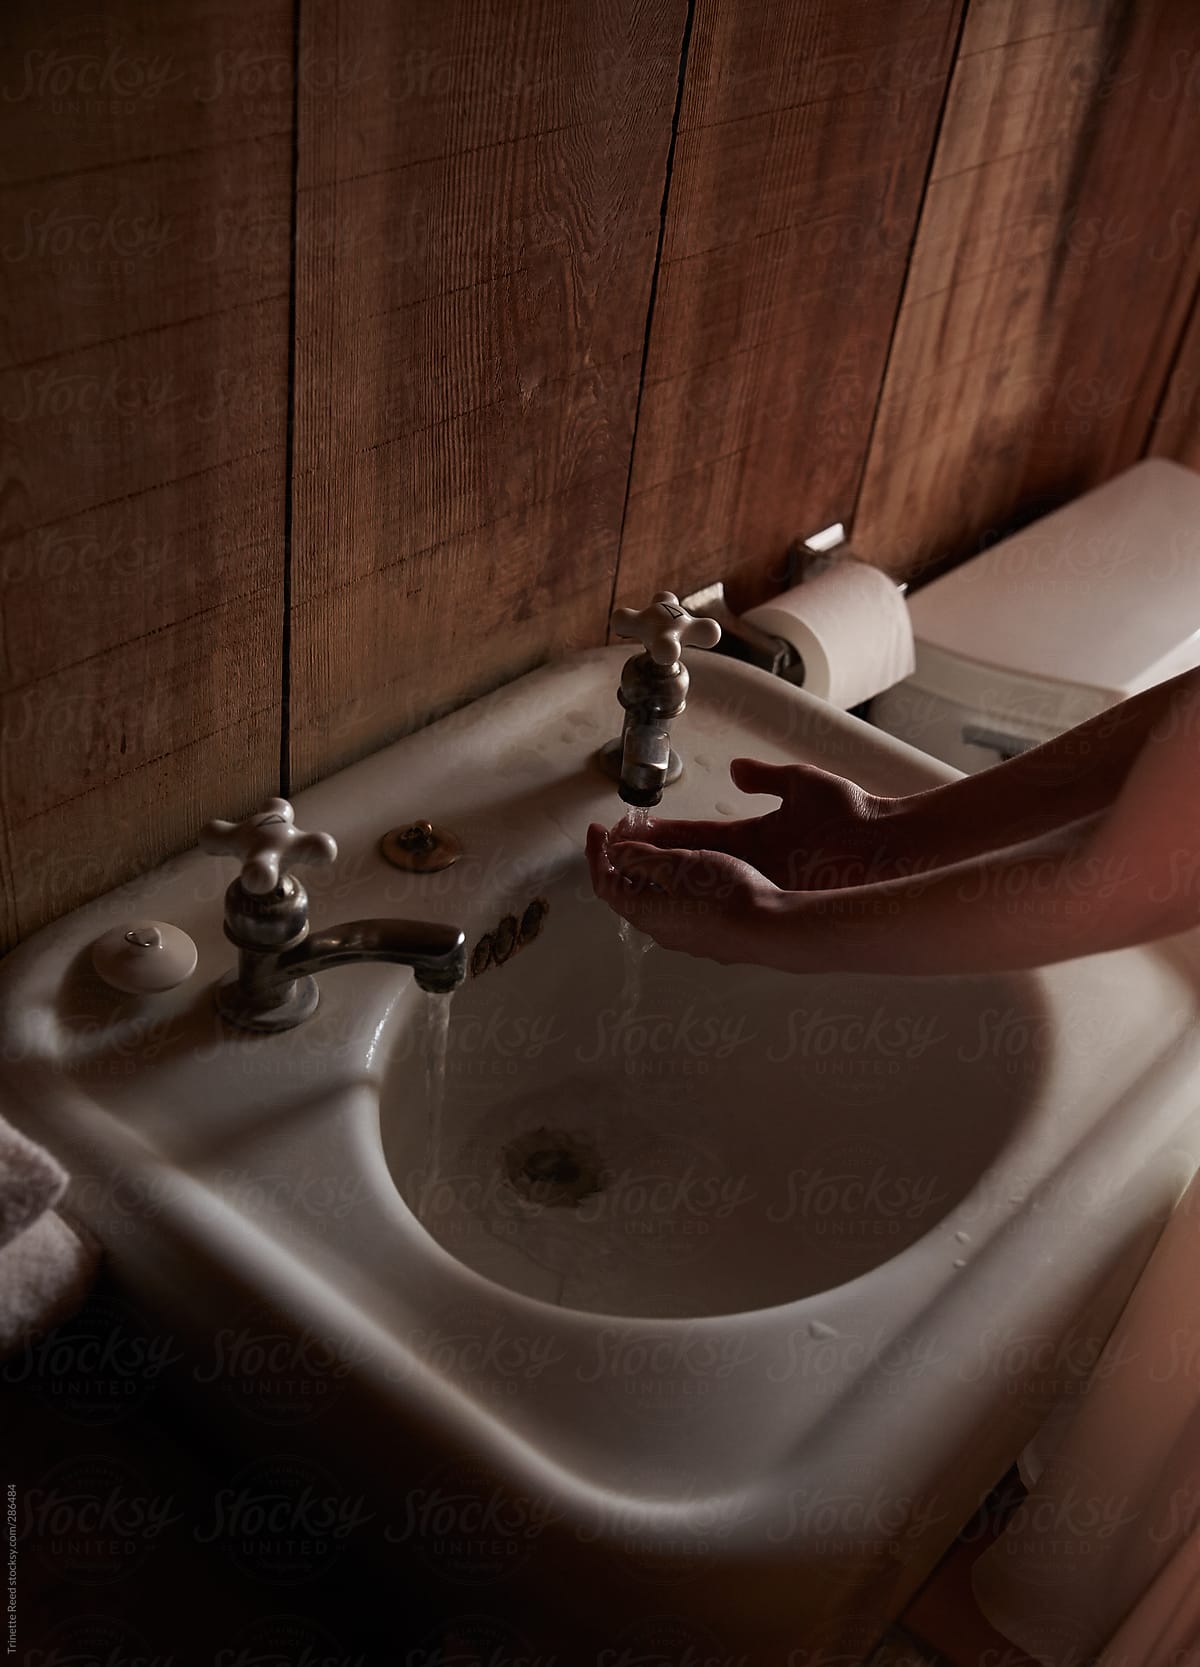 Woman washing her hands in rustic wood cabin bathroom